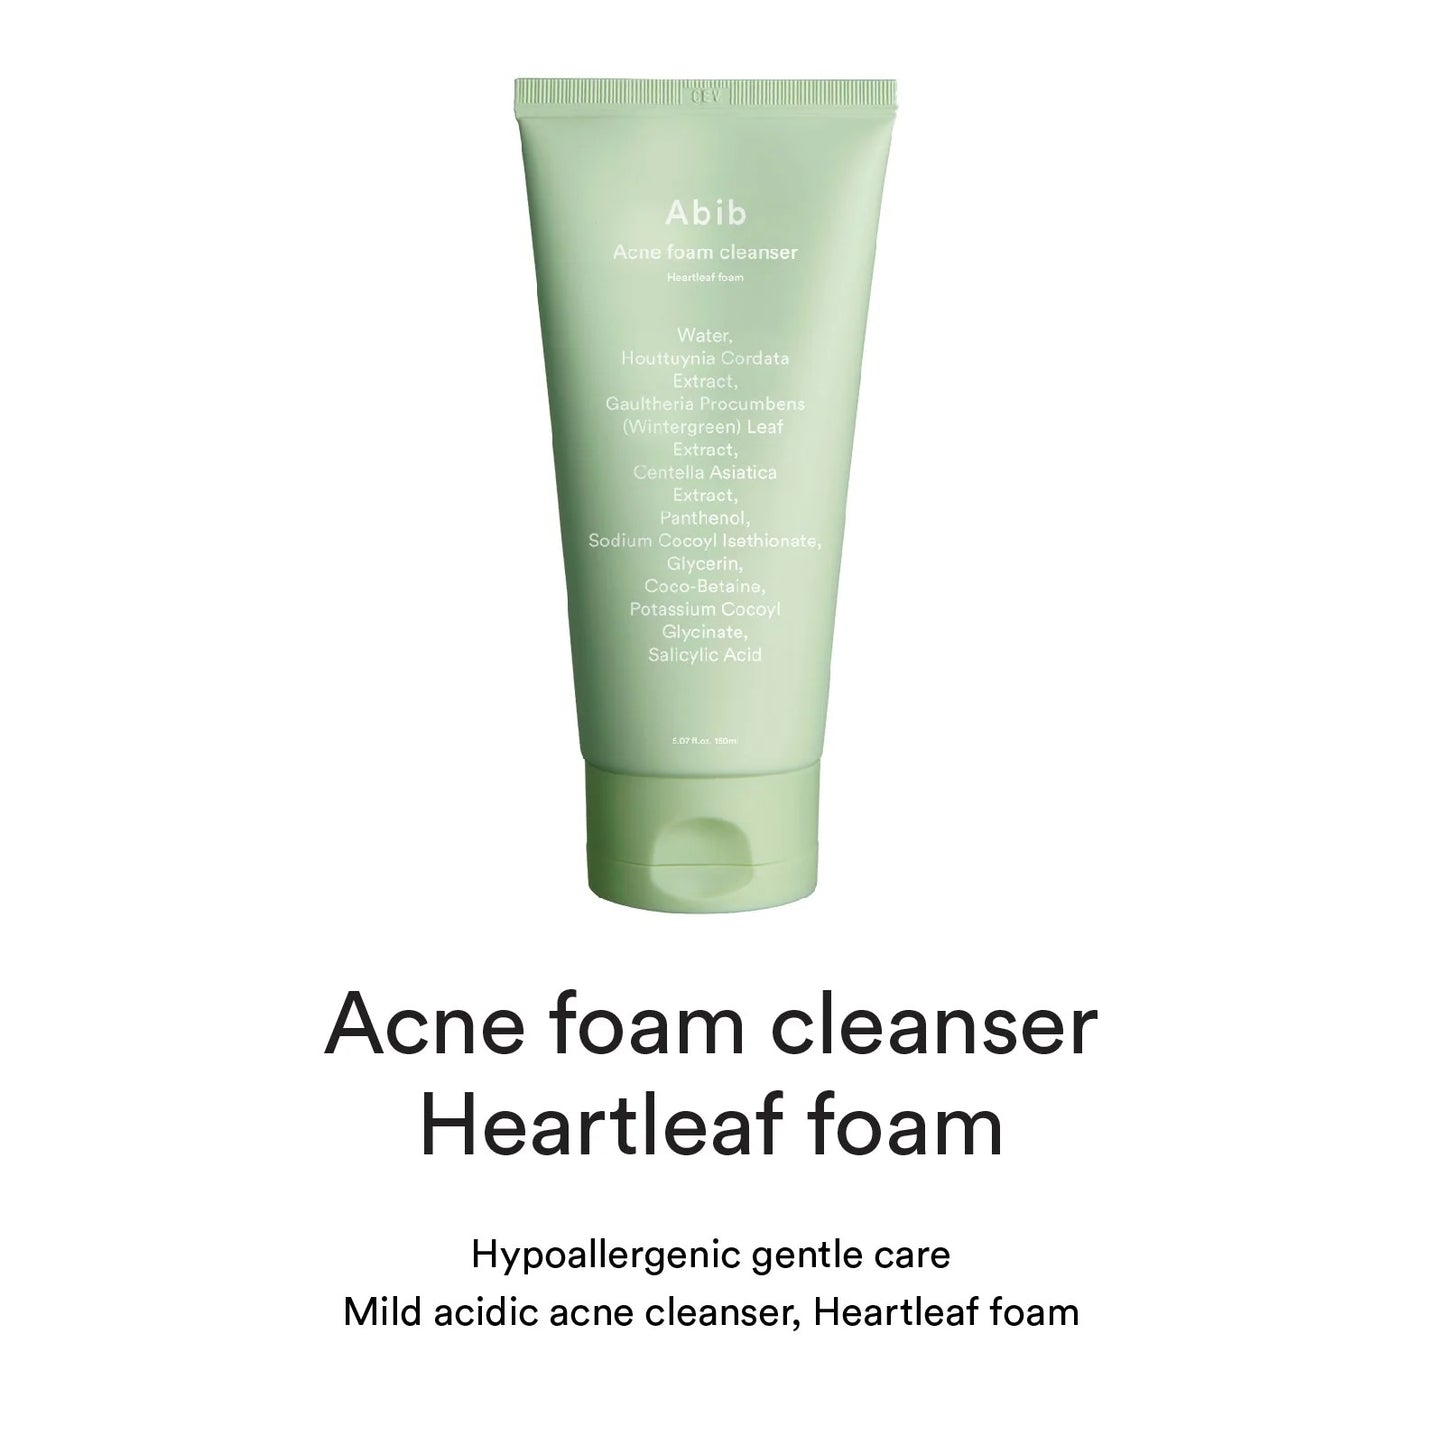 [Abib] Acne foam cleanser Heartleaf foam - 150ml